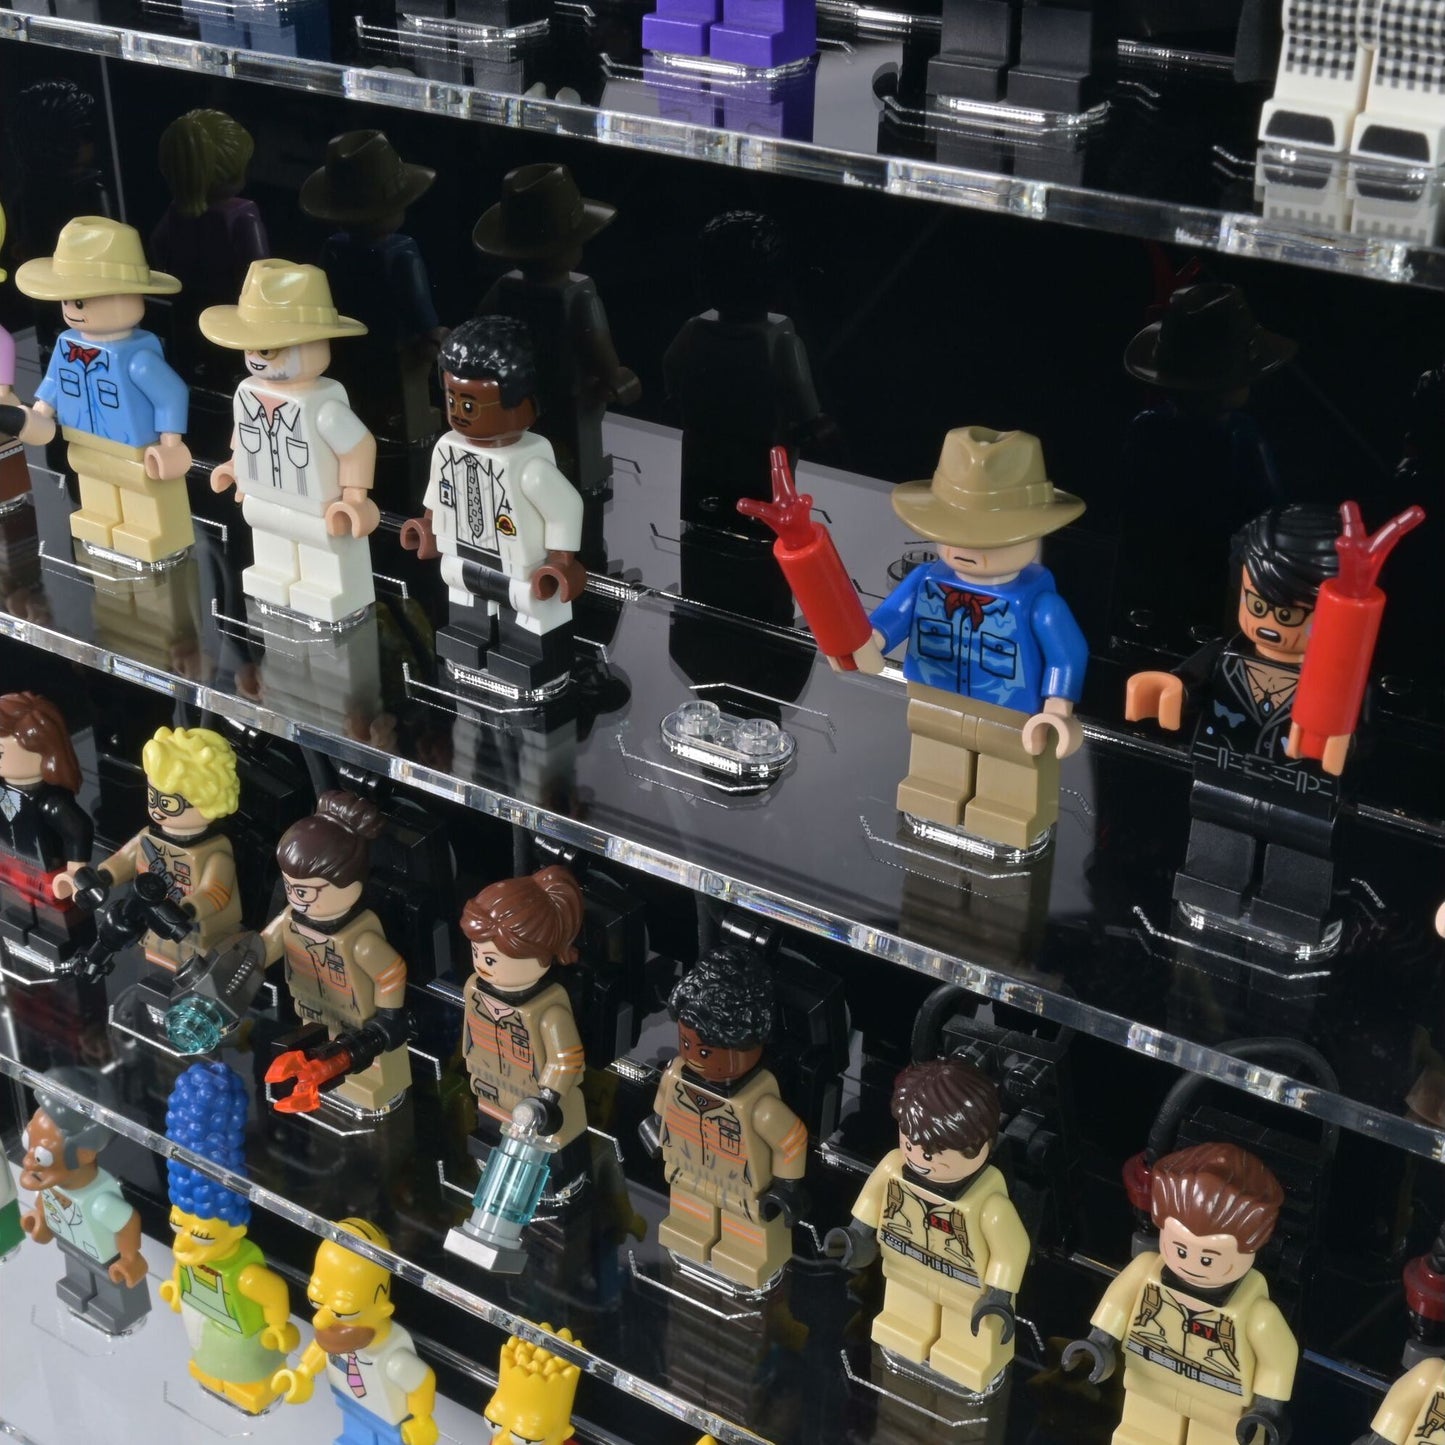 40 LEGO® Minifigures Wall-Mounted Display Case